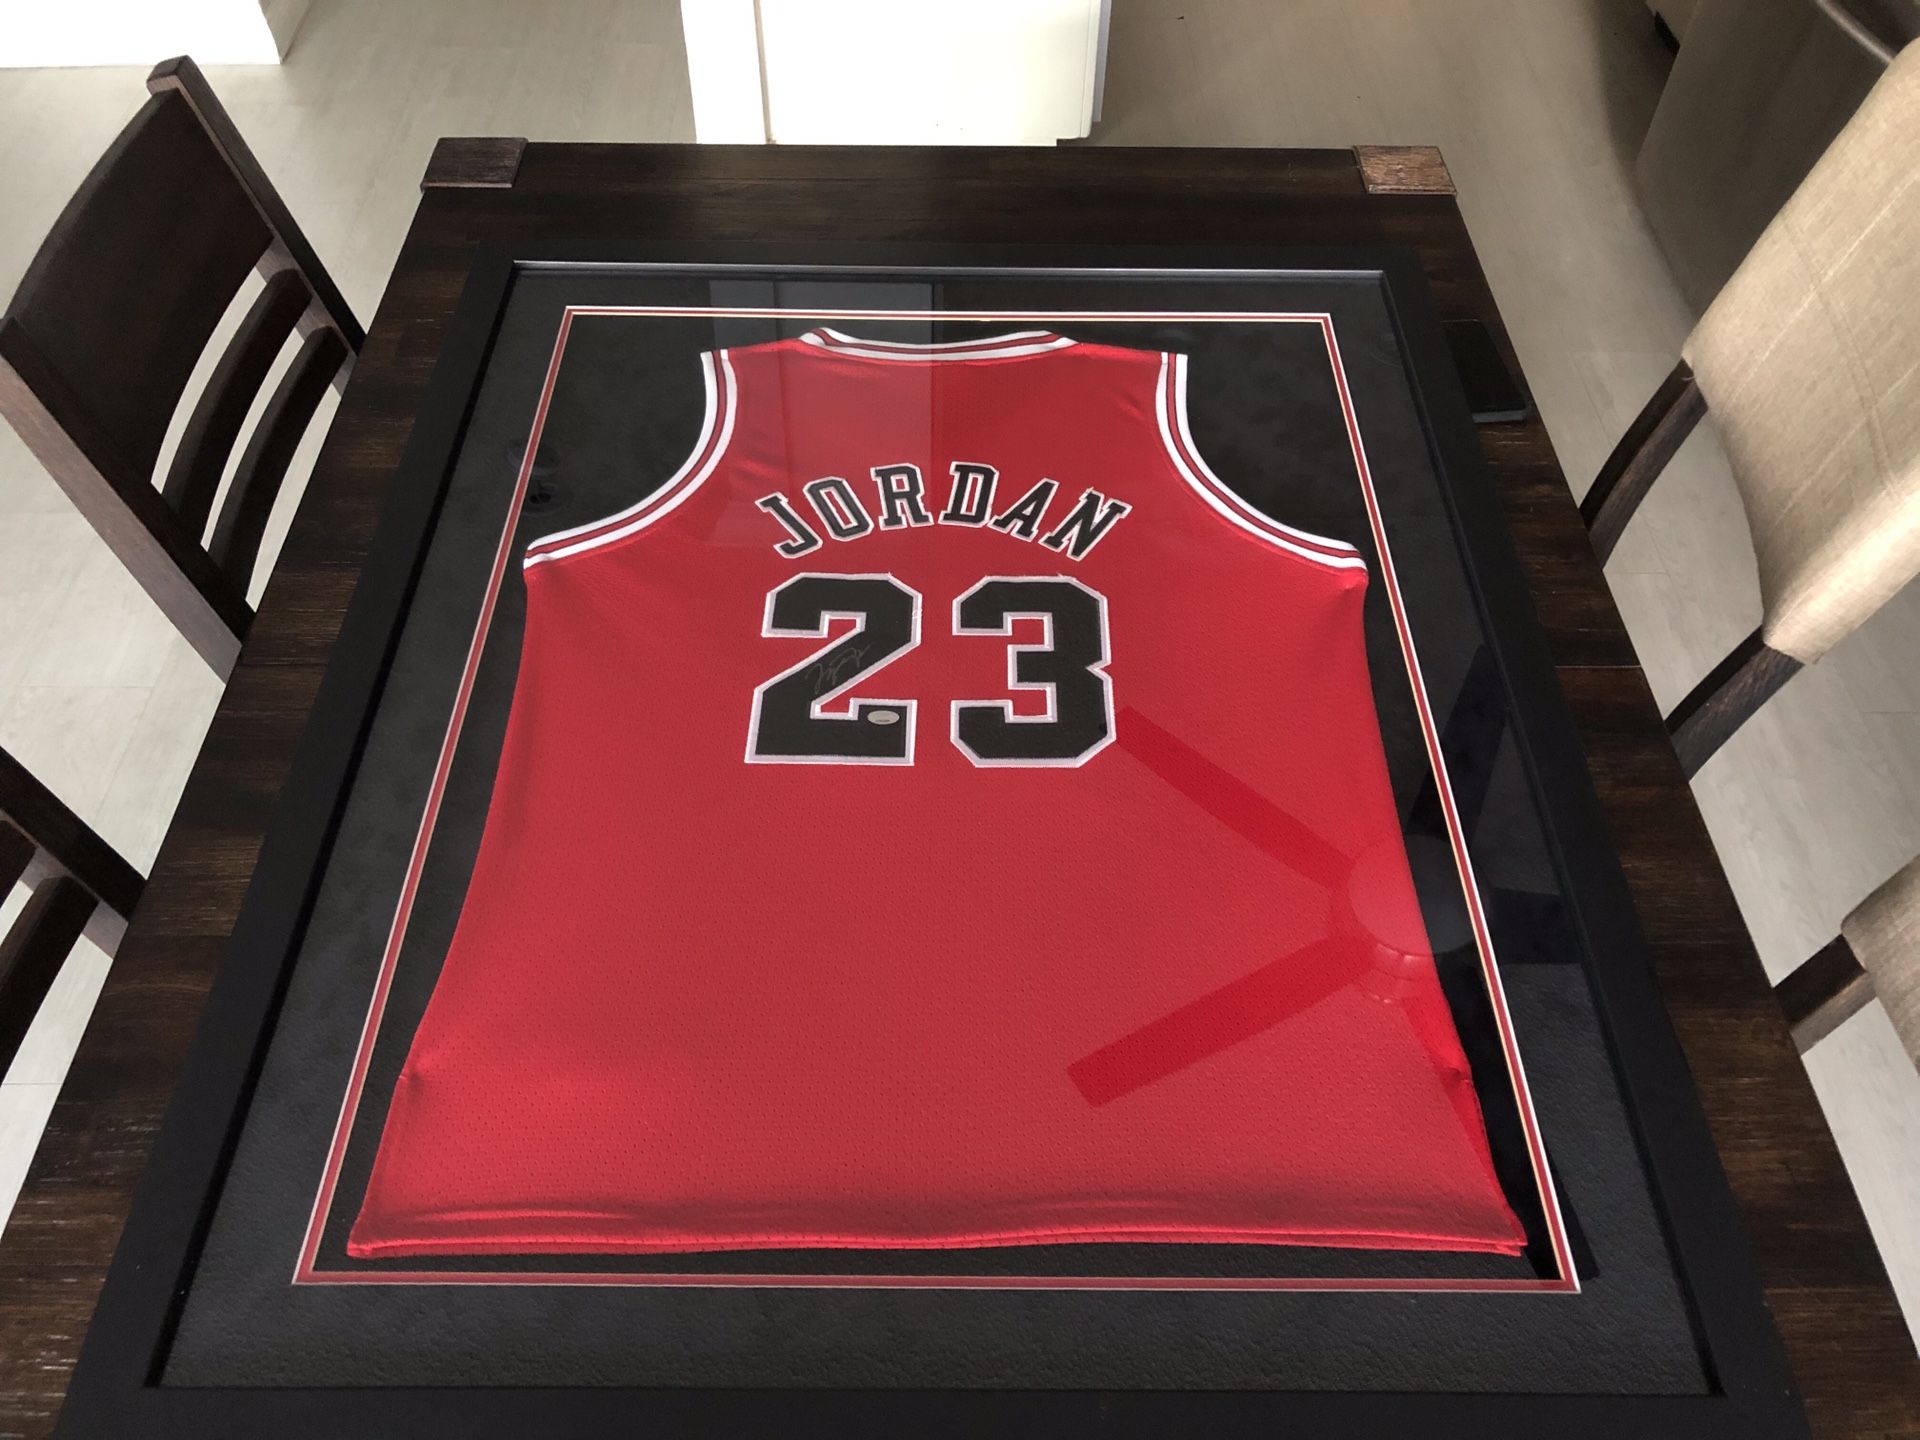 Michael Jordan Chicago Bulls Autographed Signed Framed Jersey PSA/DNA LOA